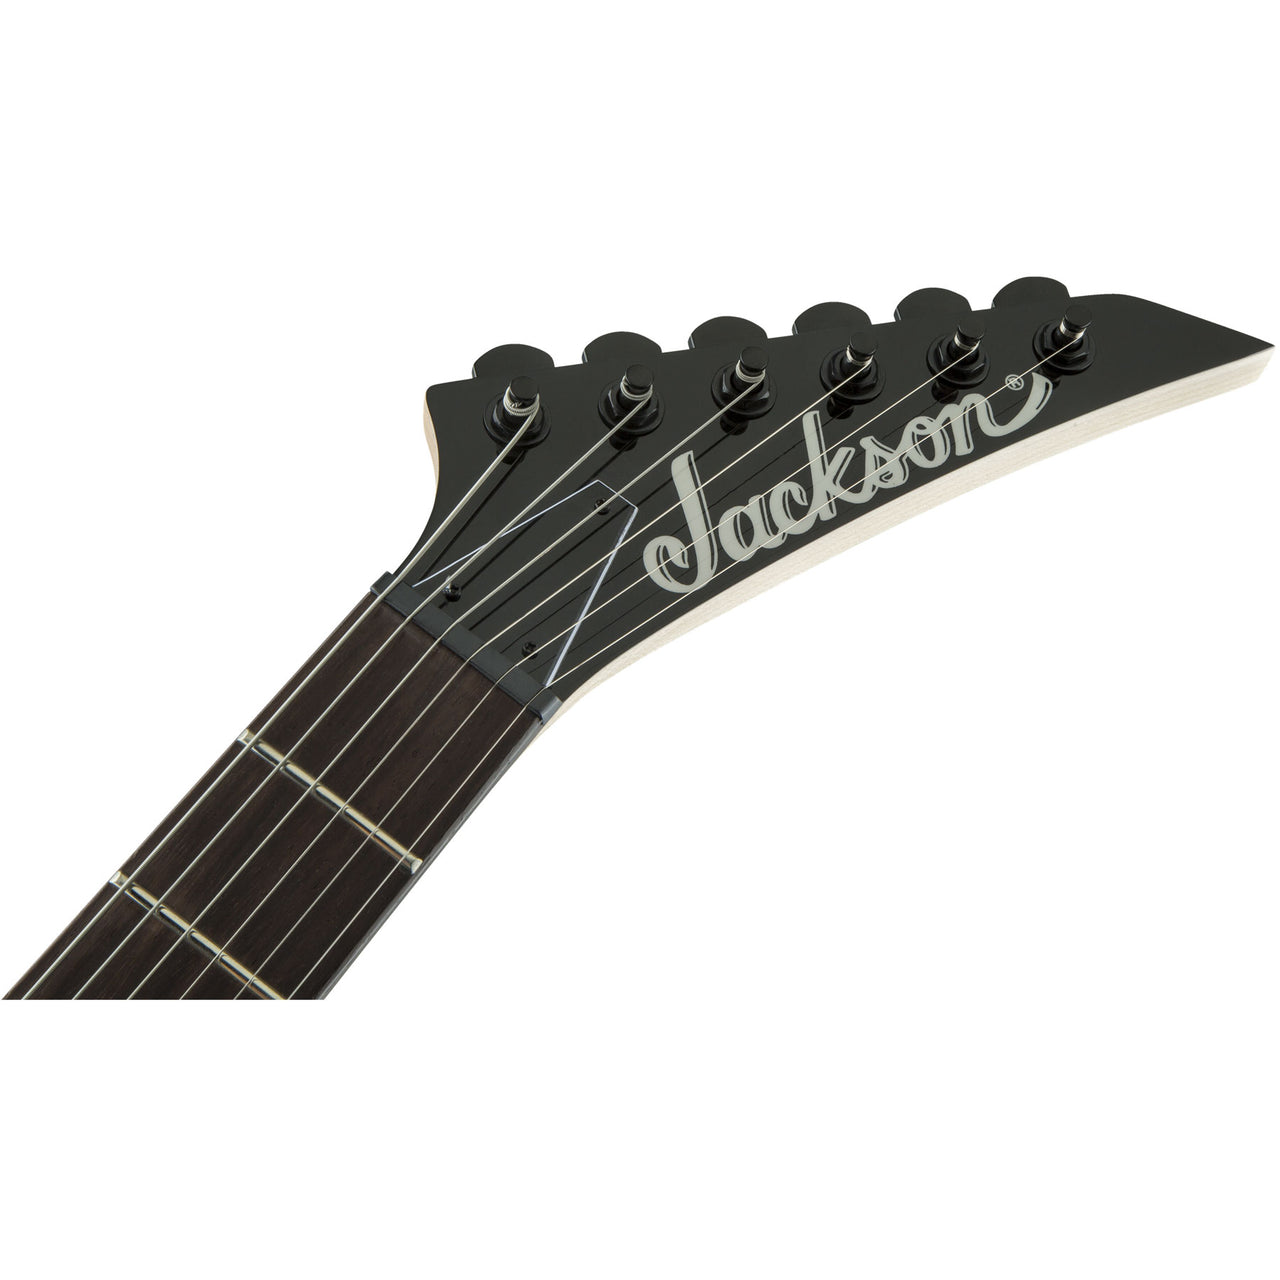 Guitarra Eléctrica Jackson Js11 Dk Gloss Black 2910121503